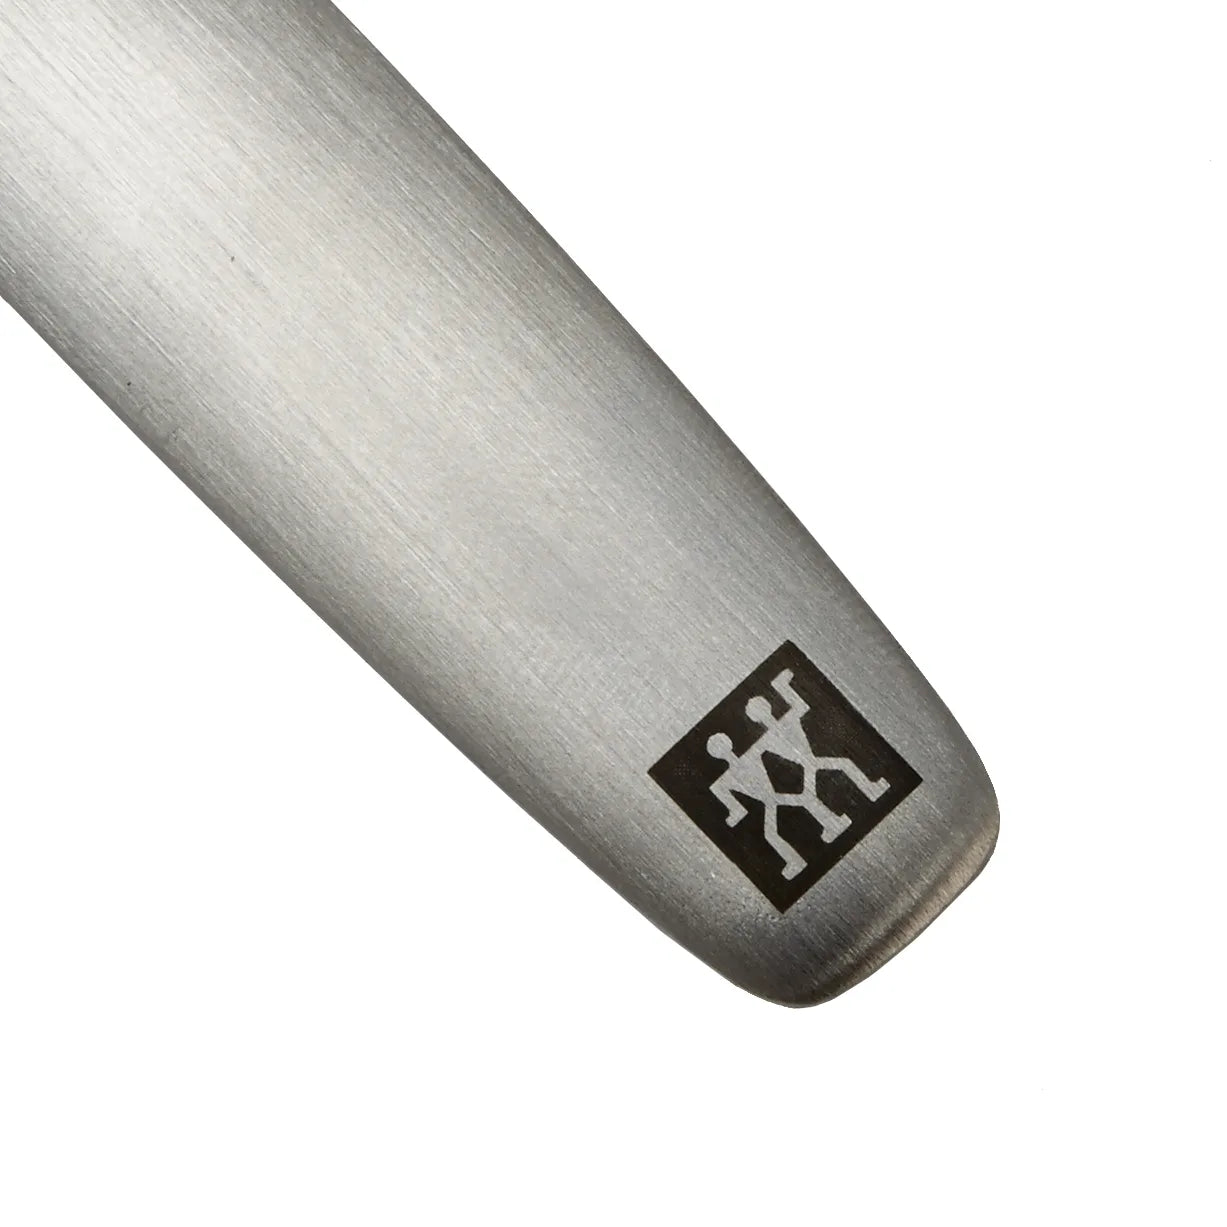 Zwilling Twinox nail file stainless steel 13 cm - silver matt finish